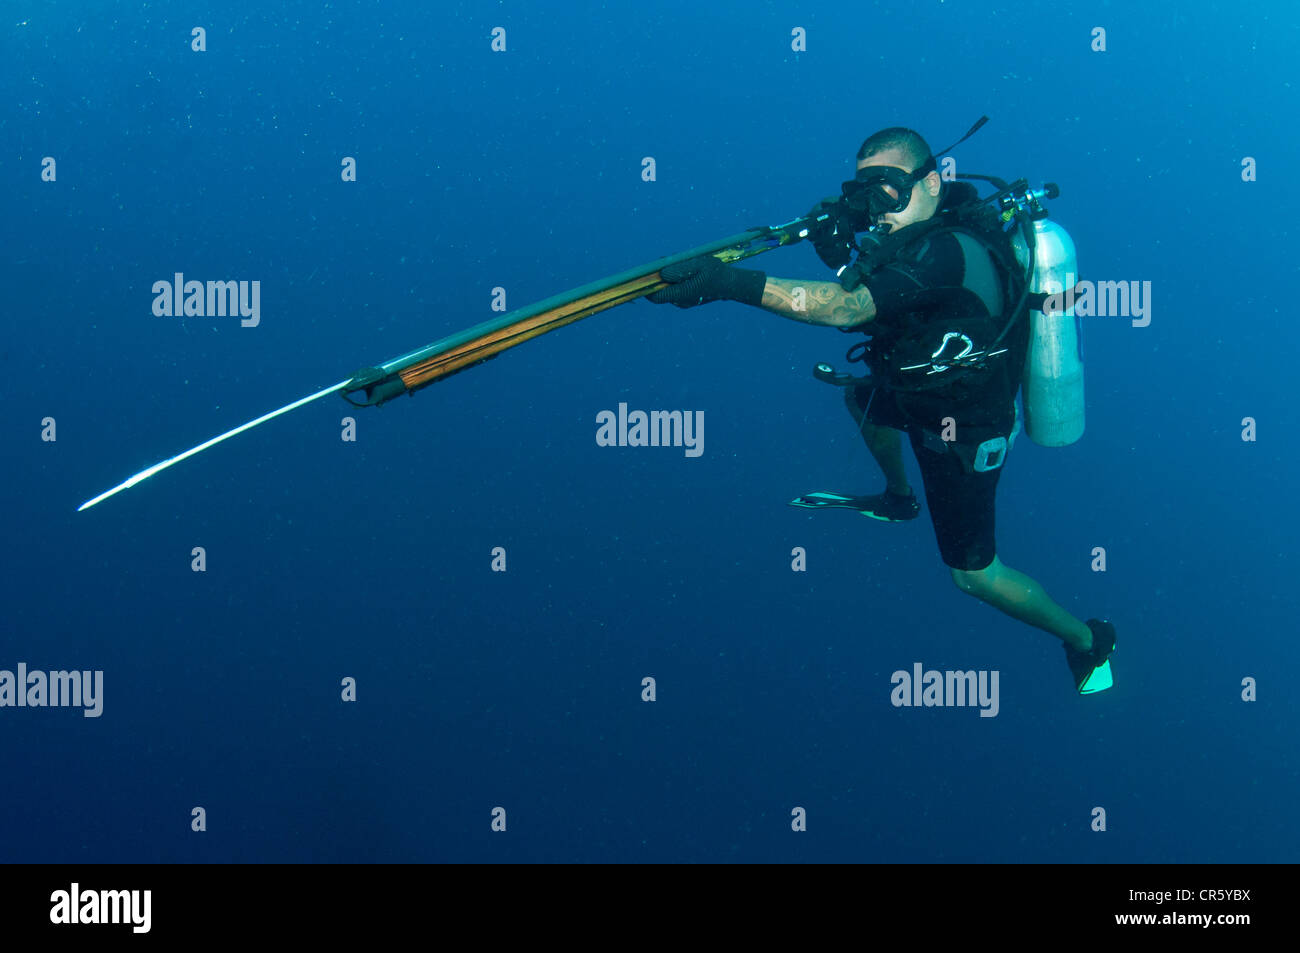 https://c8.alamy.com/comp/CR5YBX/spear-fishing-on-scuba-in-clear-blue-water-CR5YBX.jpg